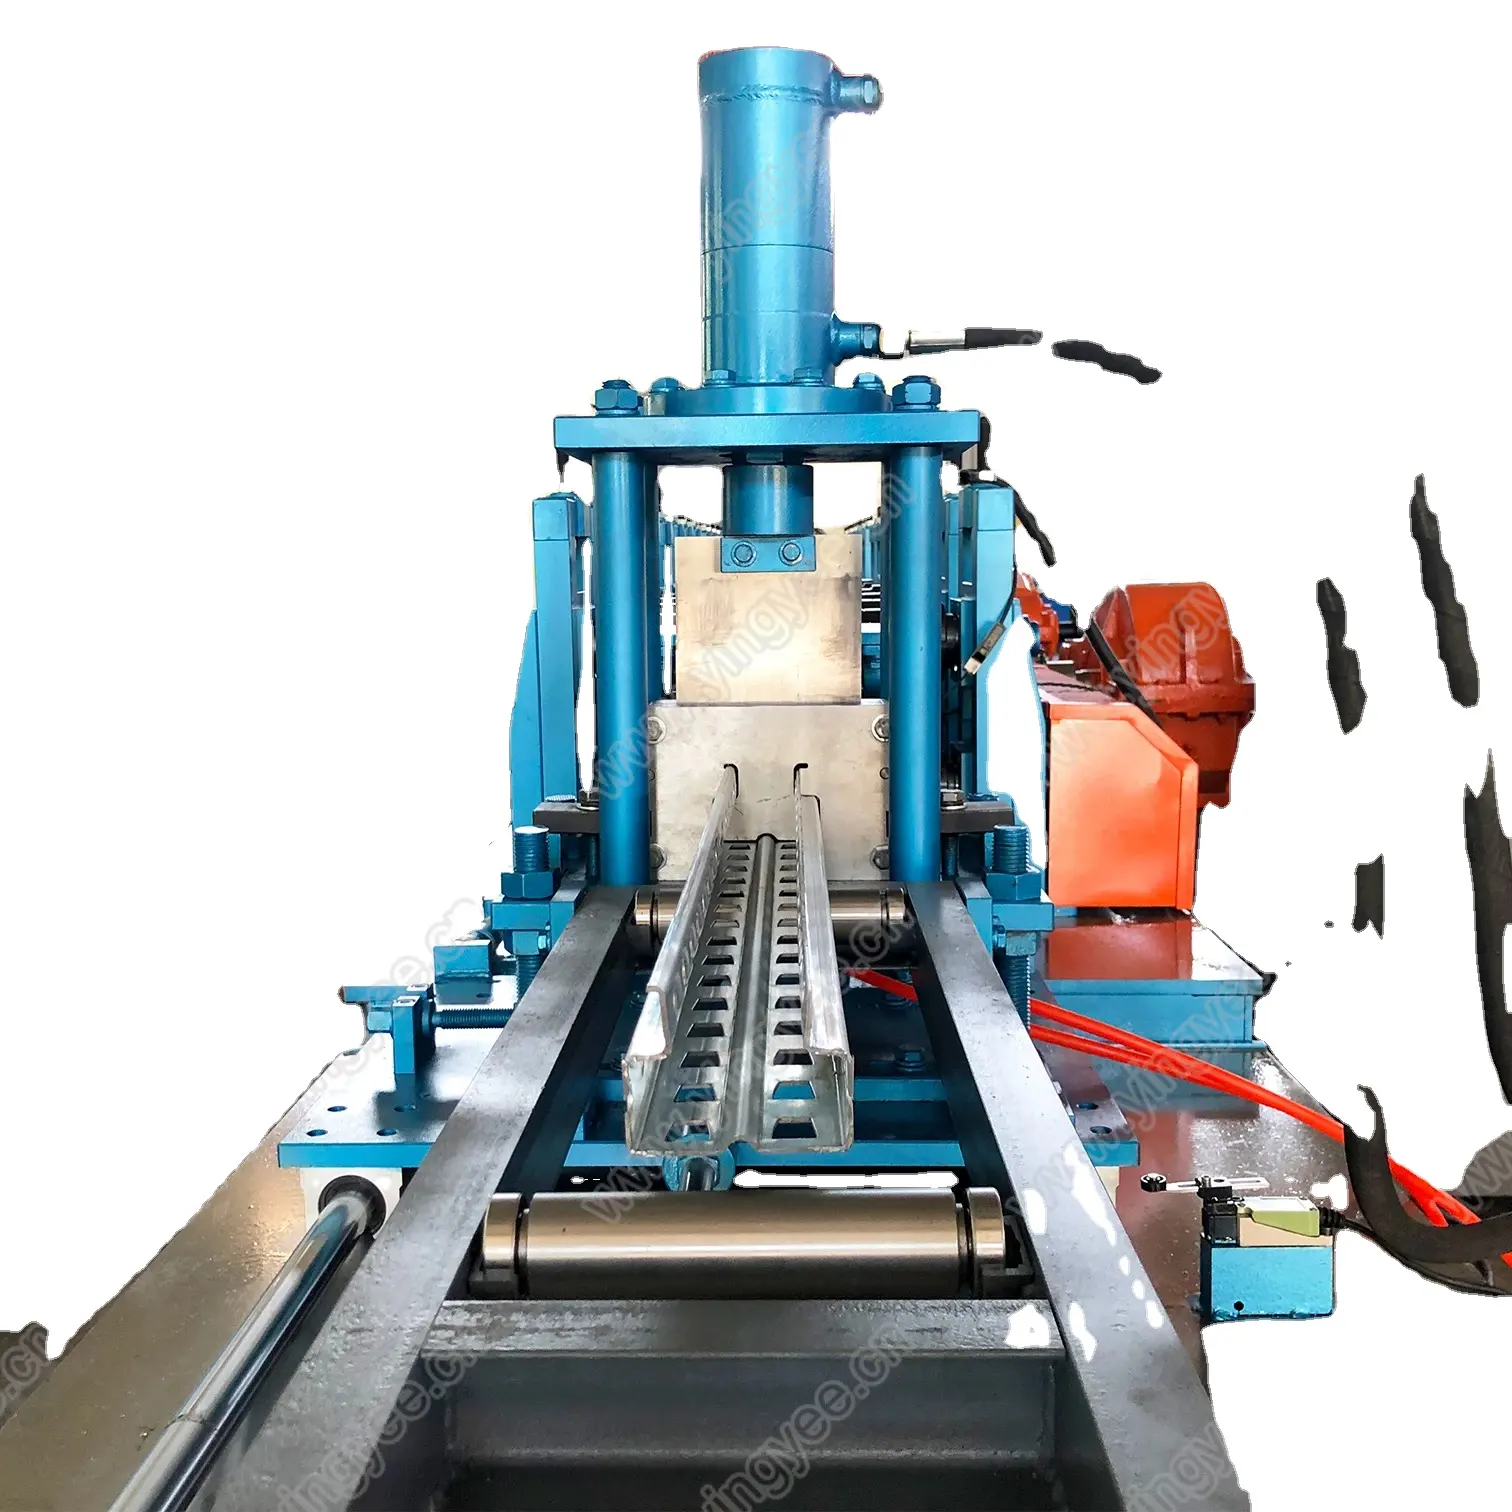 Hochwertige Lager regal Rollform maschine Regal maschine Rollform Metall herstellung Maschine aufrecht Rack in China